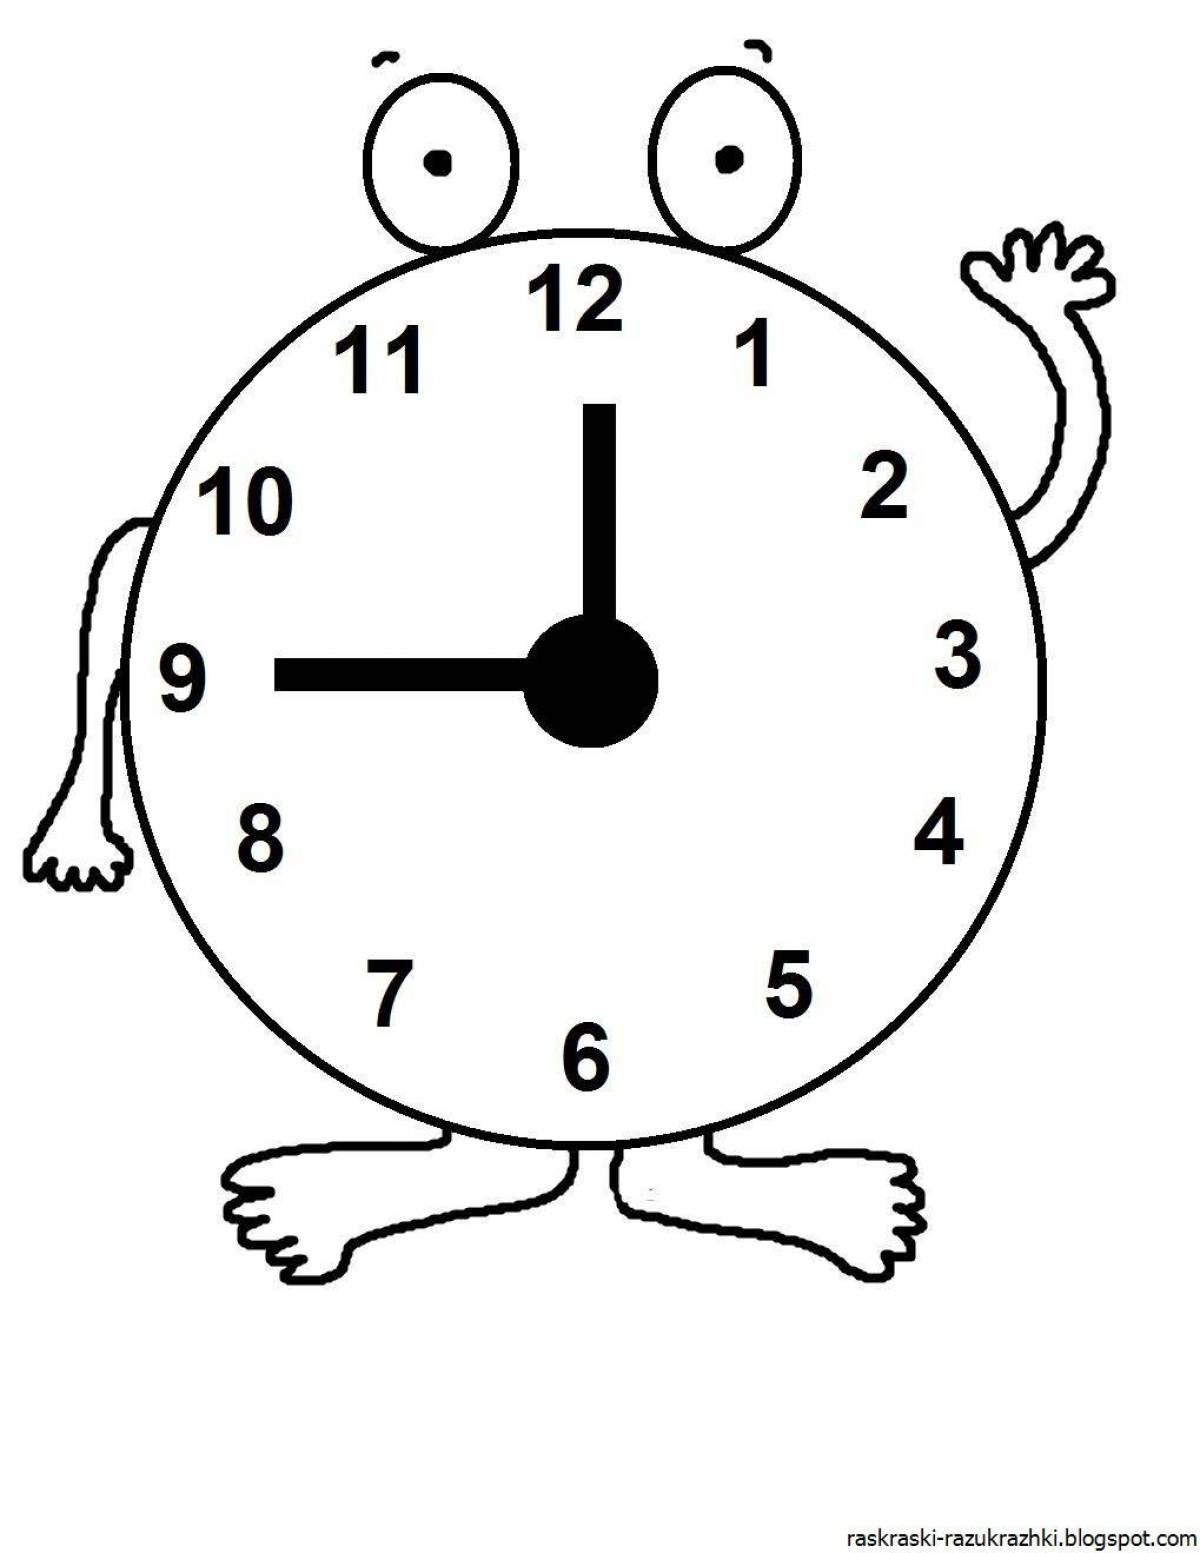 Раскраски часов для детей. Часы раскраска. Часы раскраска для детей. Часы картинка для детей раскраска. Часики раскраска.